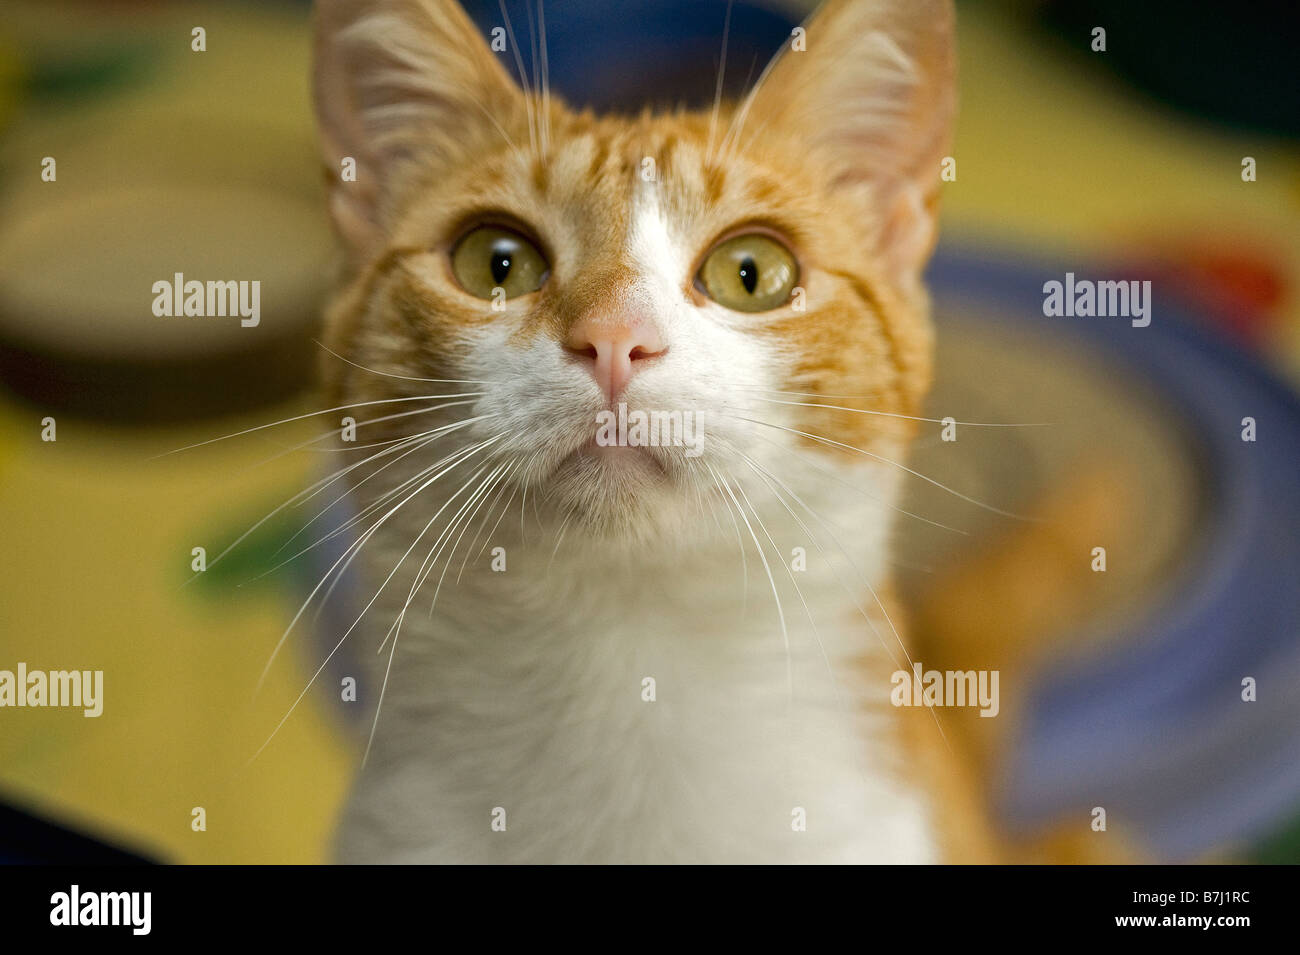 red tabby cat - kitten - portrait Stock Photo